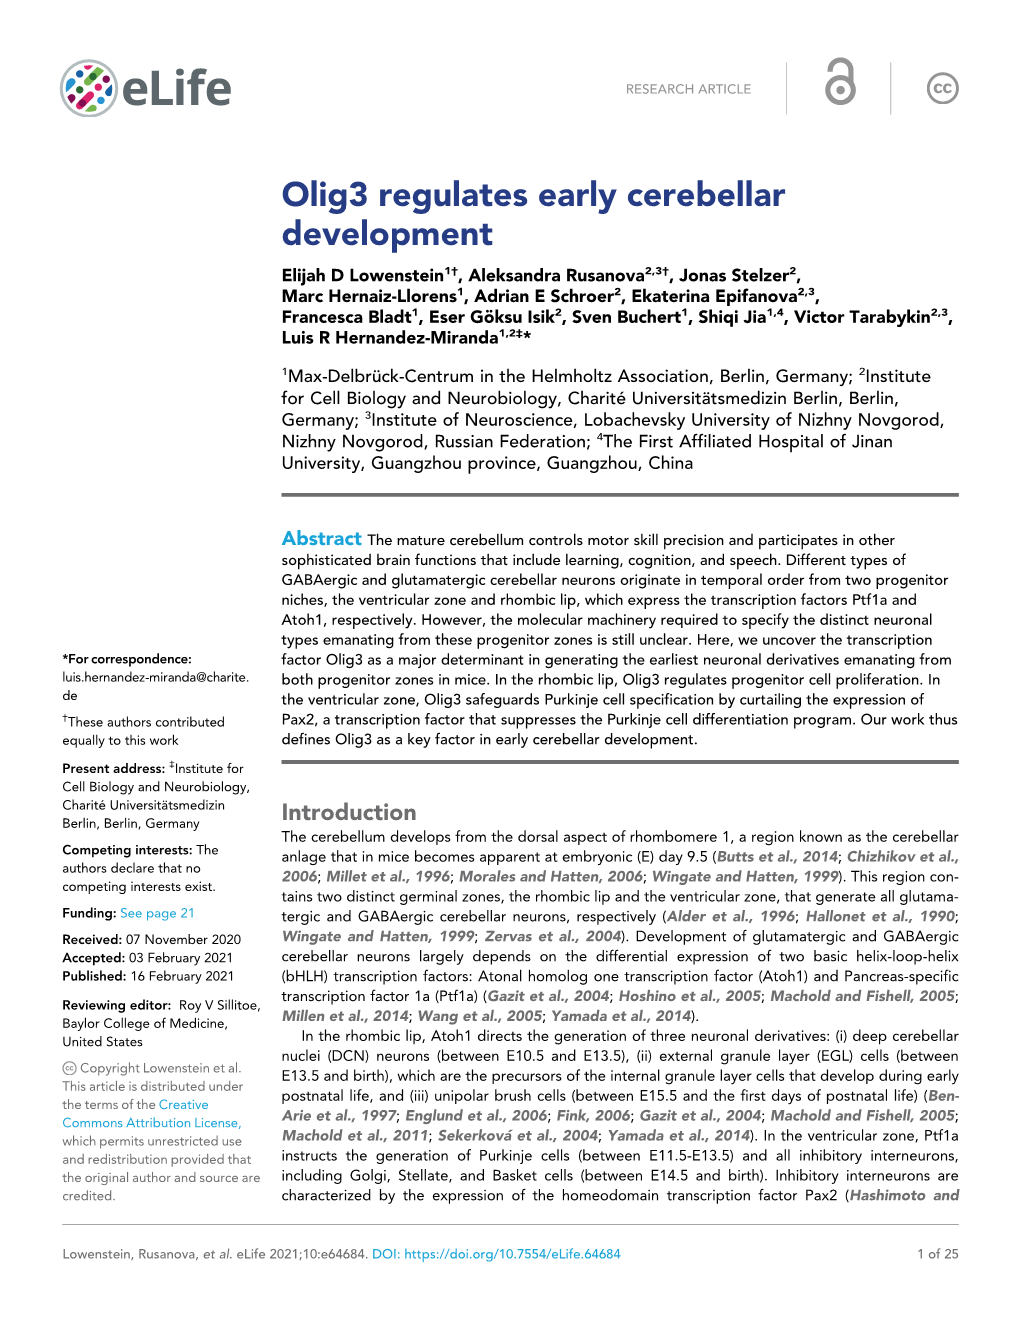 Olig3 Regulates Early Cerebellar Development